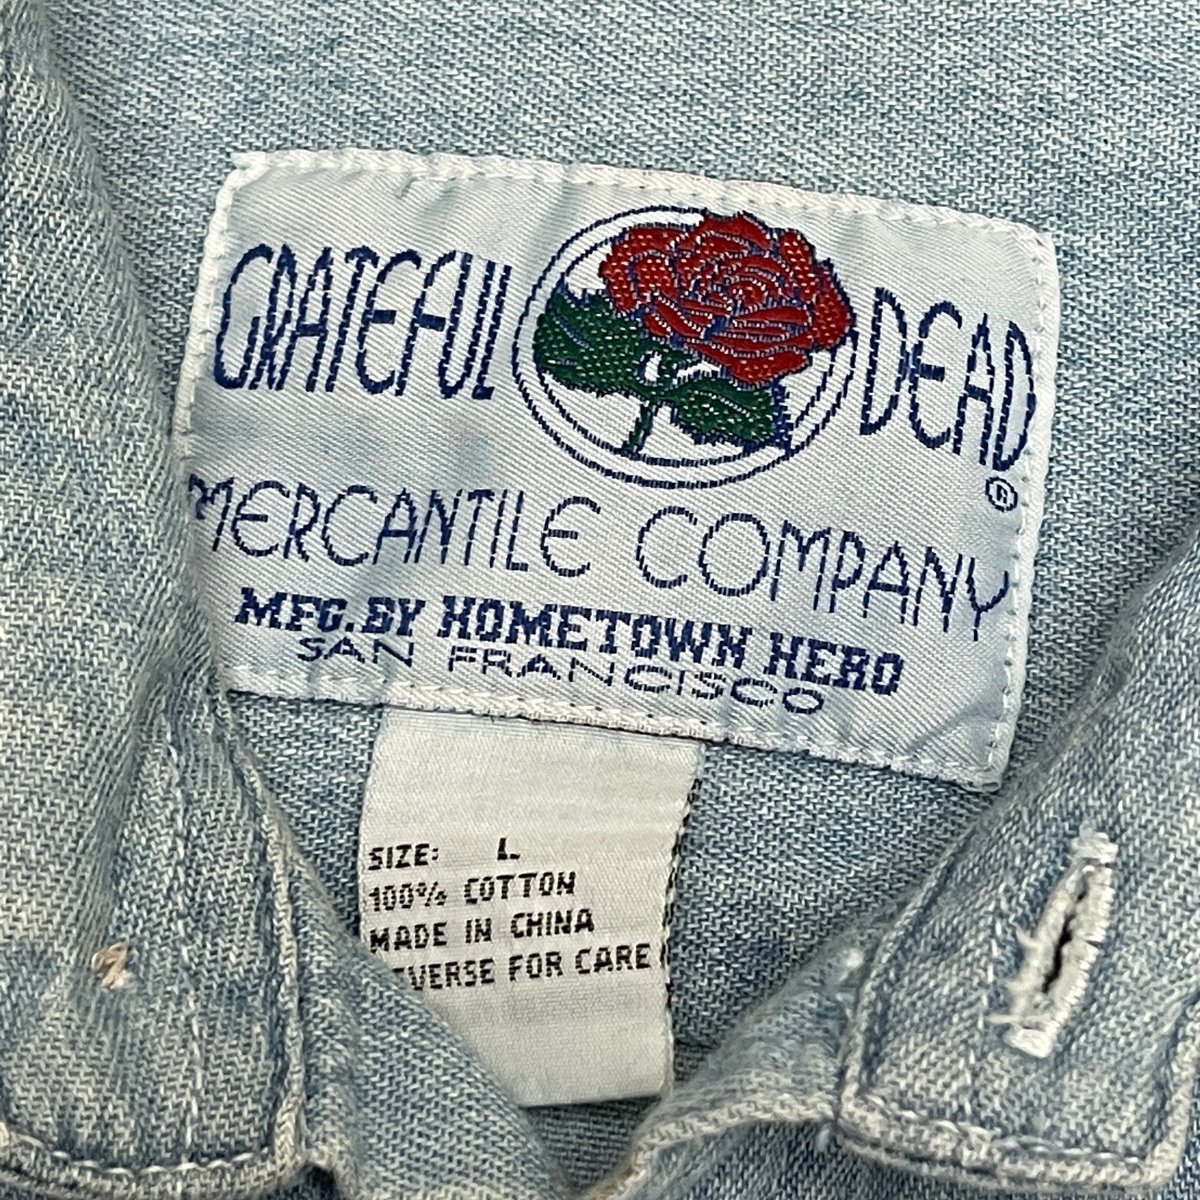 Original Vintage Grateful Dead Crew 90’s Embroidered Denim Long Sleeve!!! Tagged Large. Fits XL!!